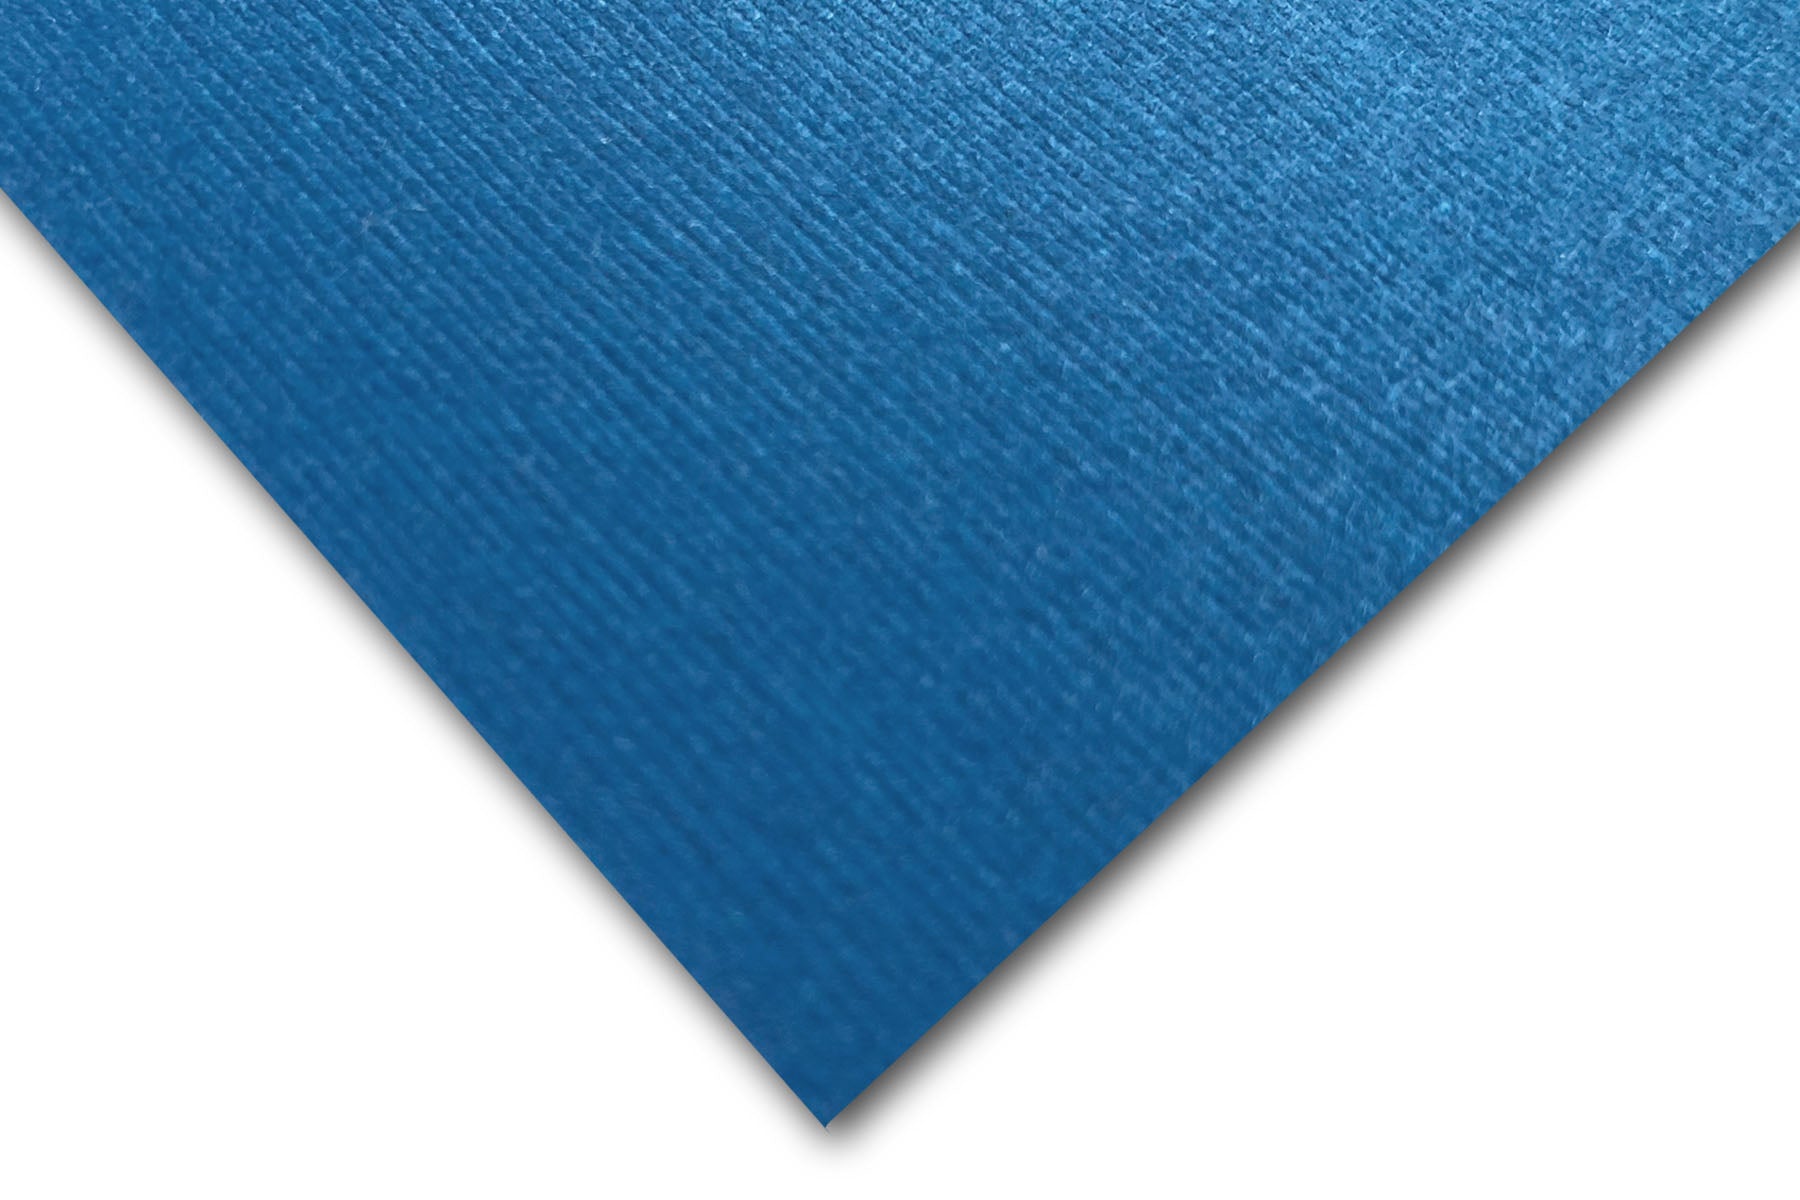 Royal Blue Card Stock - 12 x 18 Gmund Colors Matt 111lb Cover